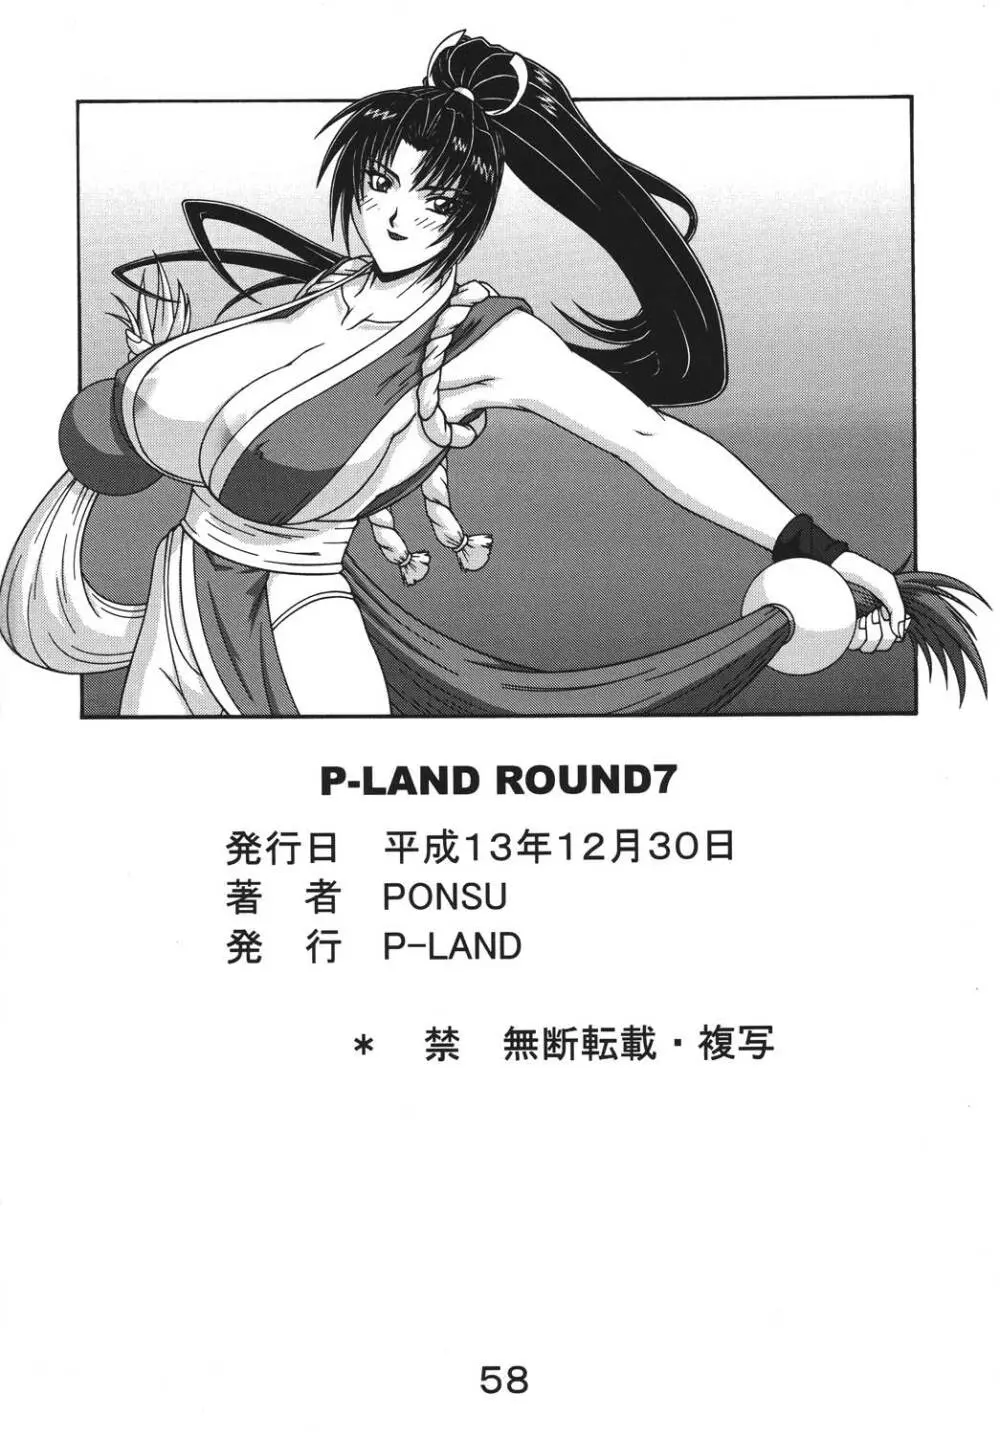 P-LAND ROUND 7 - page58